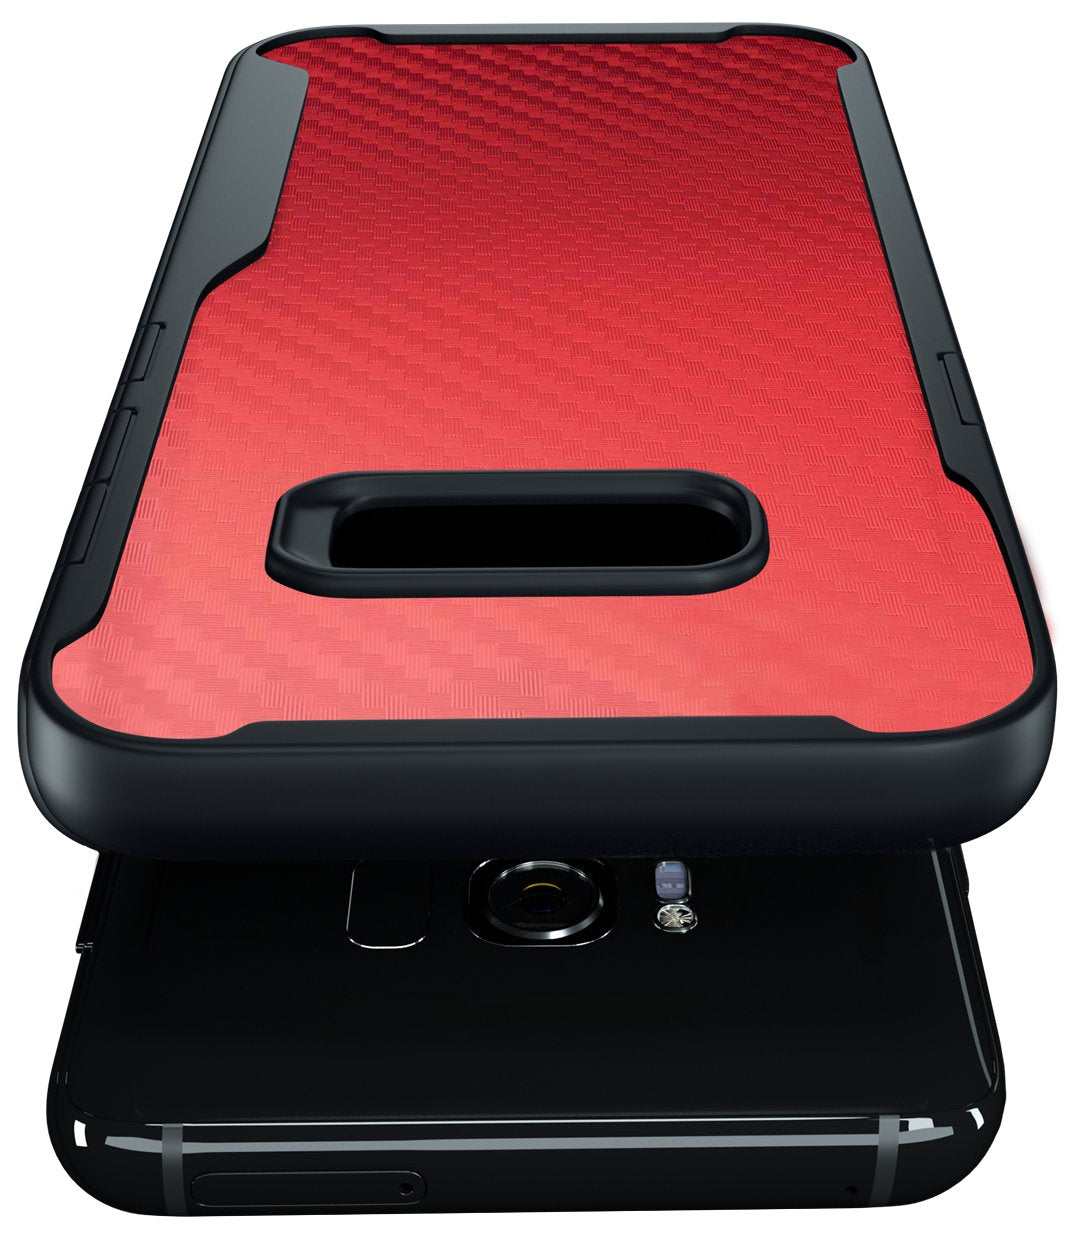 Samsung Galaxy S8 Kitoo Carbon Fiber Pattern Case Red